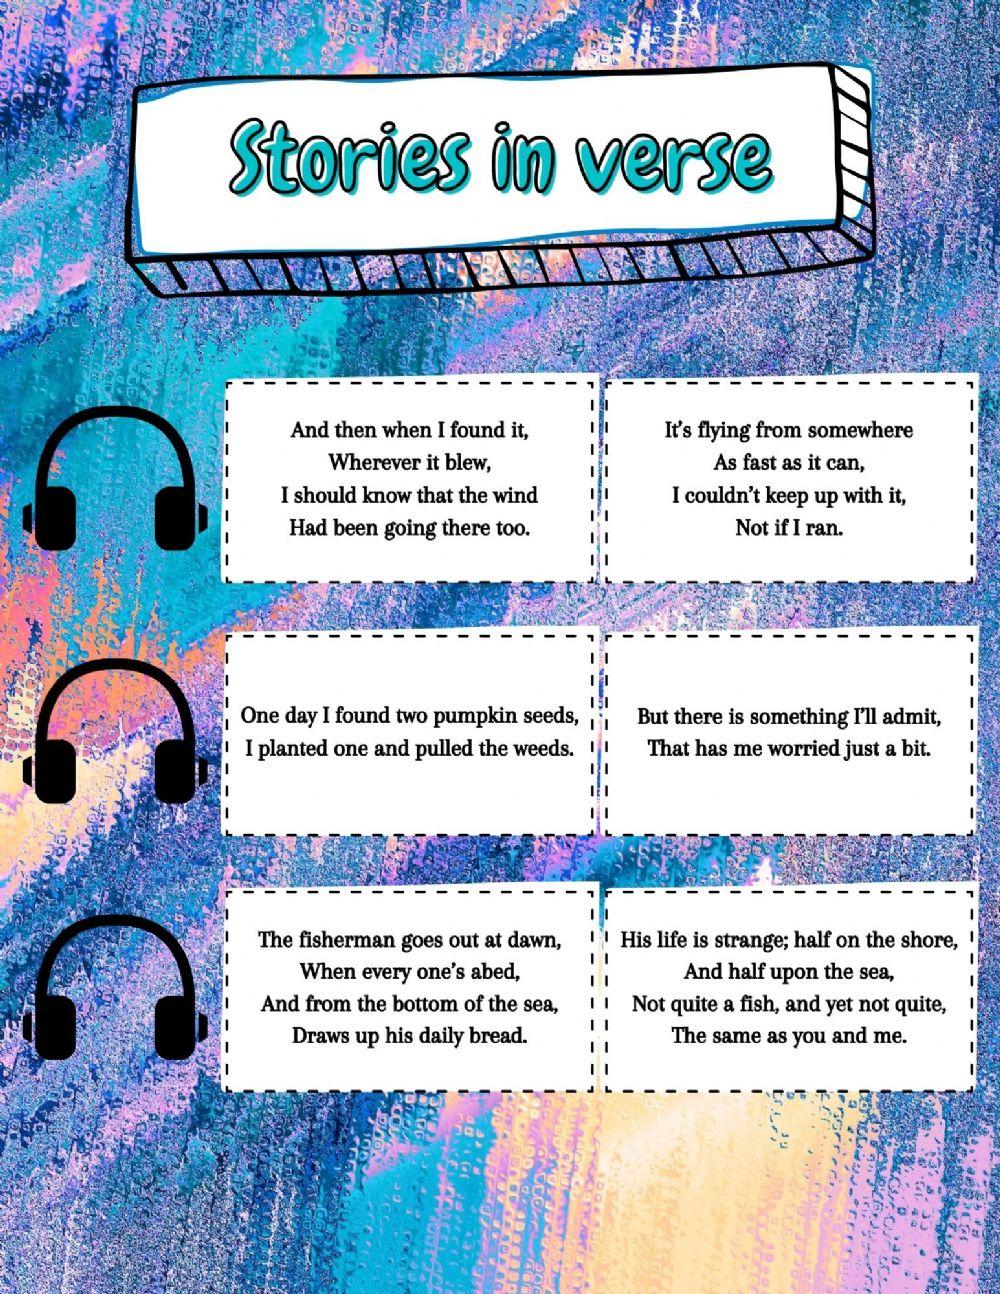 Stories in verse